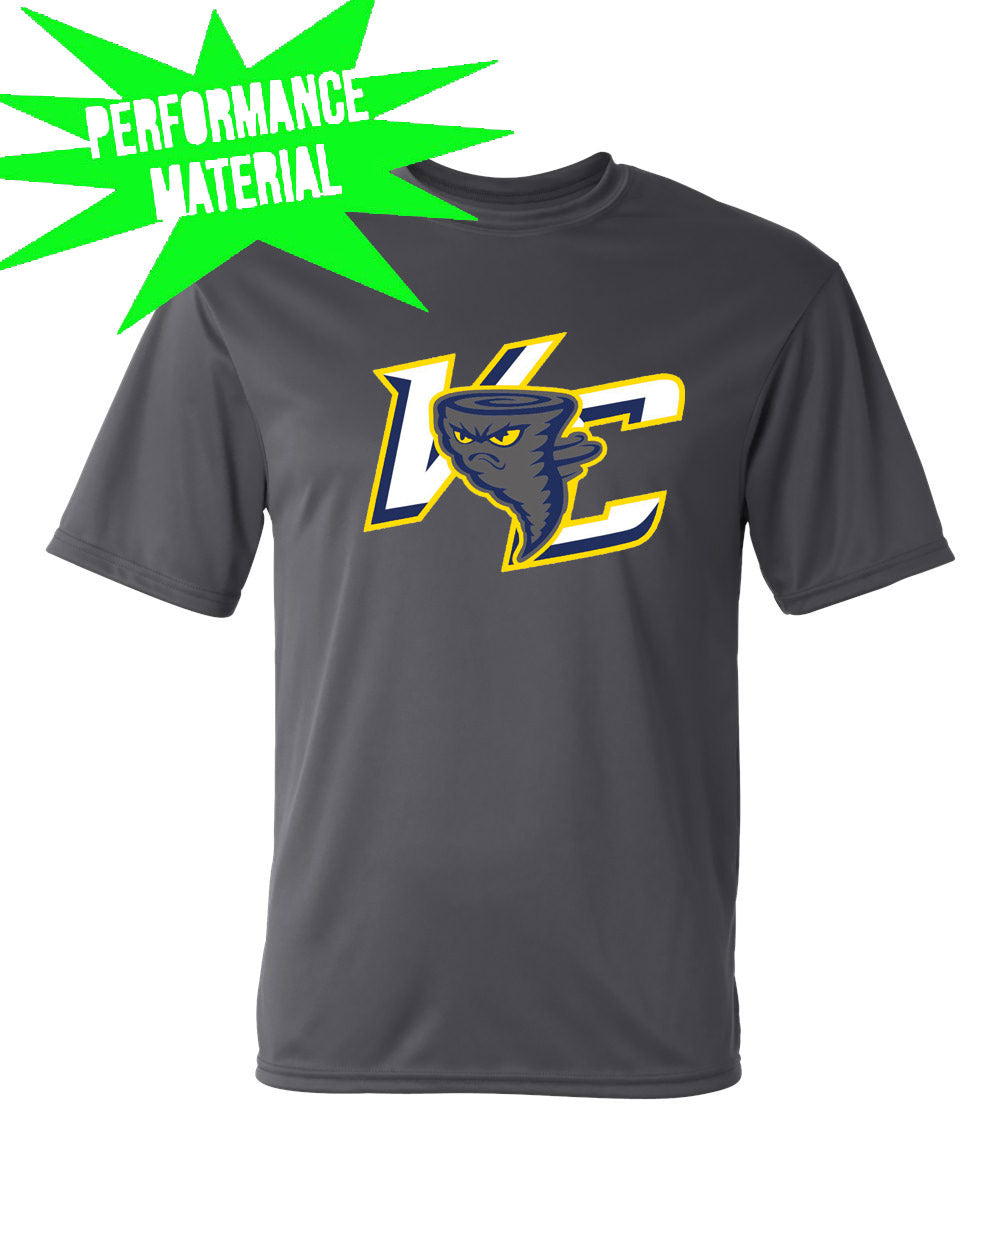 Cyclones Performance Material design 4 T-Shirt